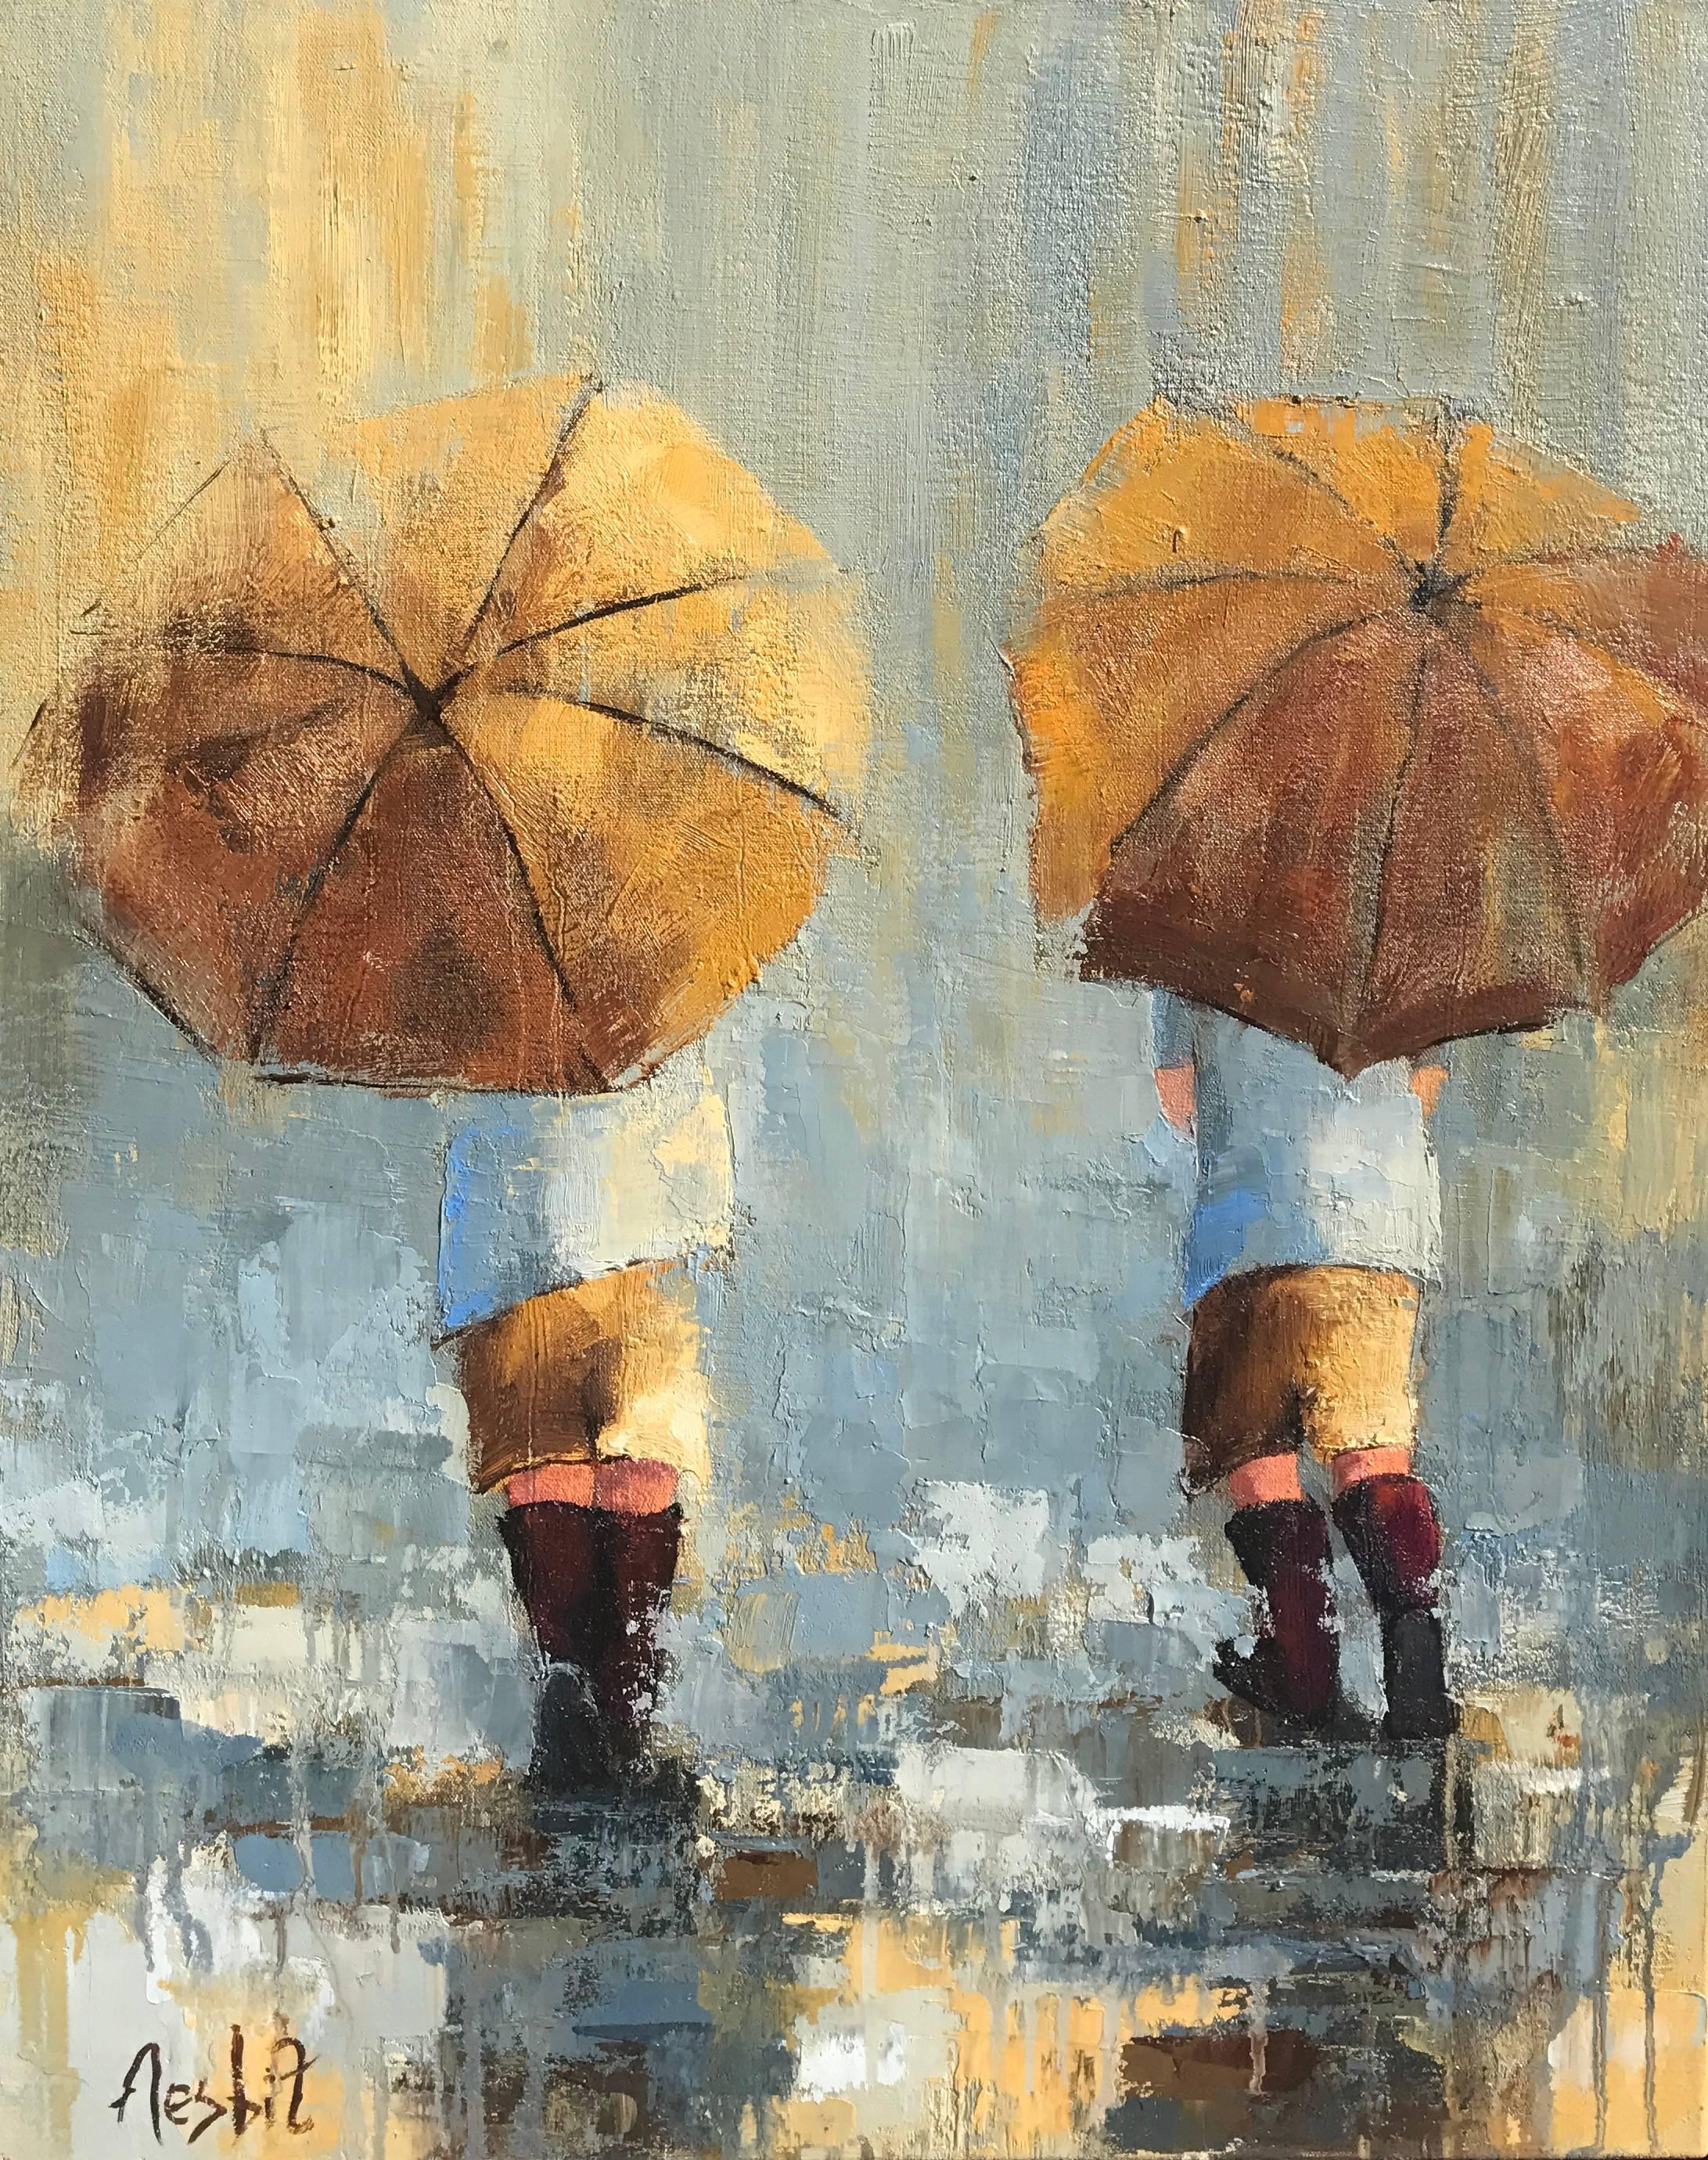 Angela Nesbit Figurative Painting - Rainy Day Boys, Impressionist Figurative Oil on Canvas Painting, Signed